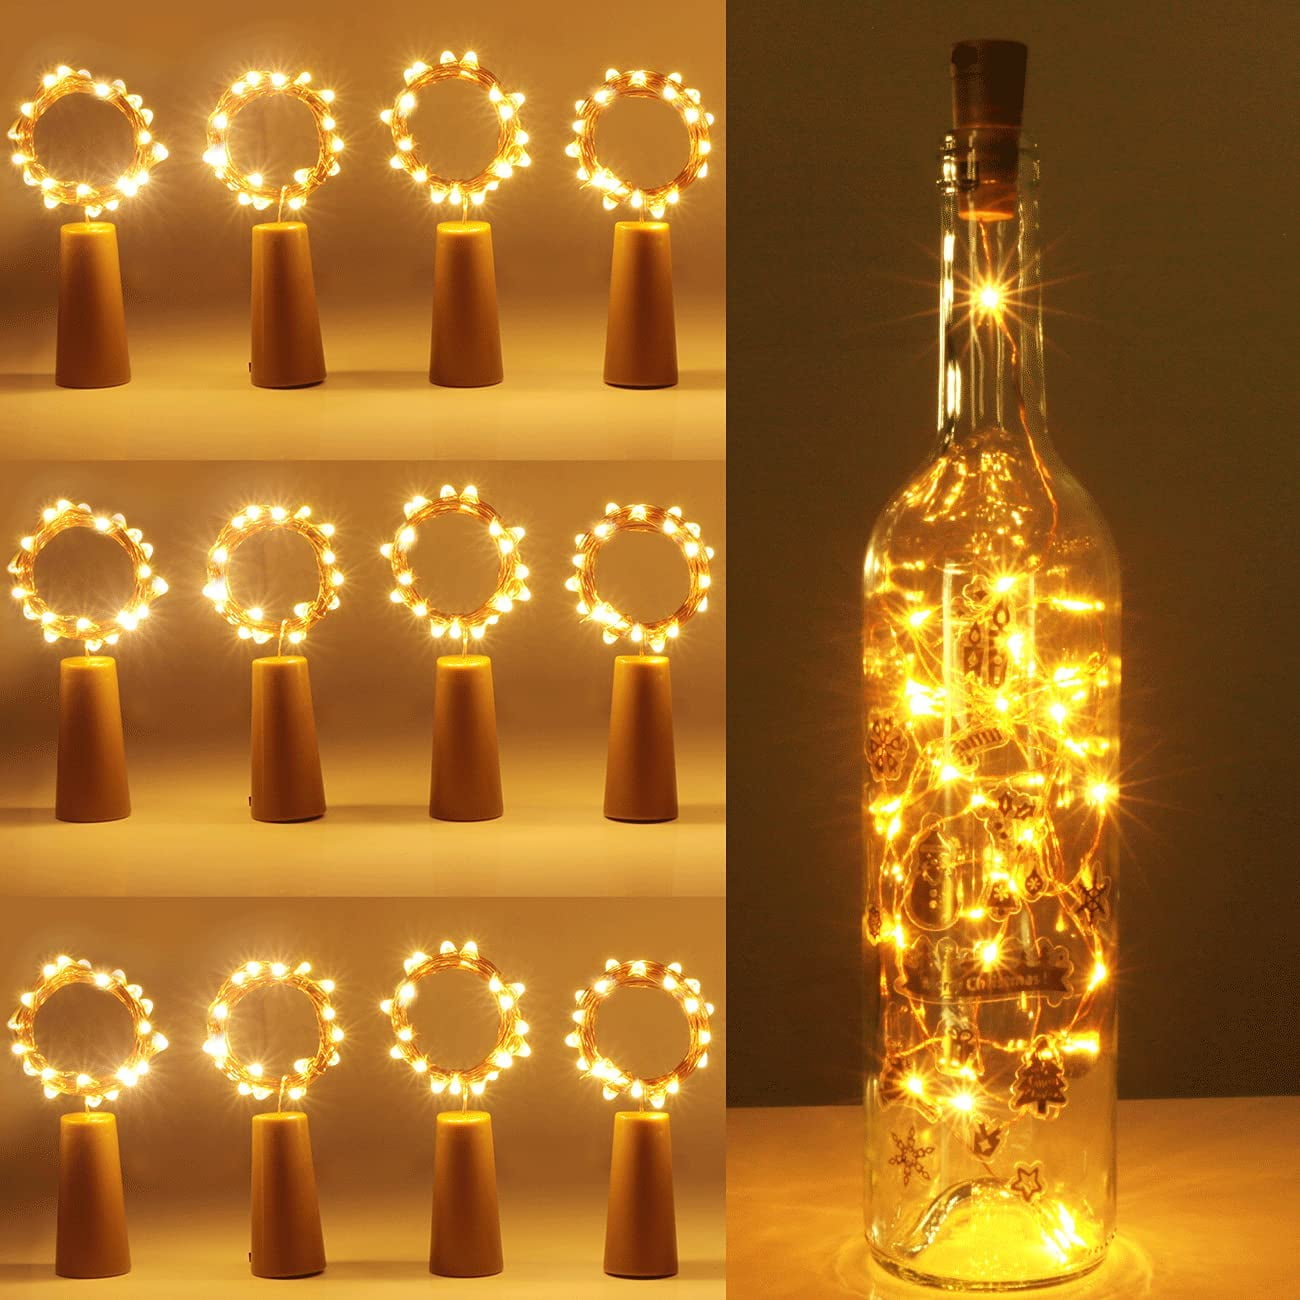 Solar Power 2M LED Copper Cork Wire String Lights Wine Bottle Xmas Decor Lamp RD